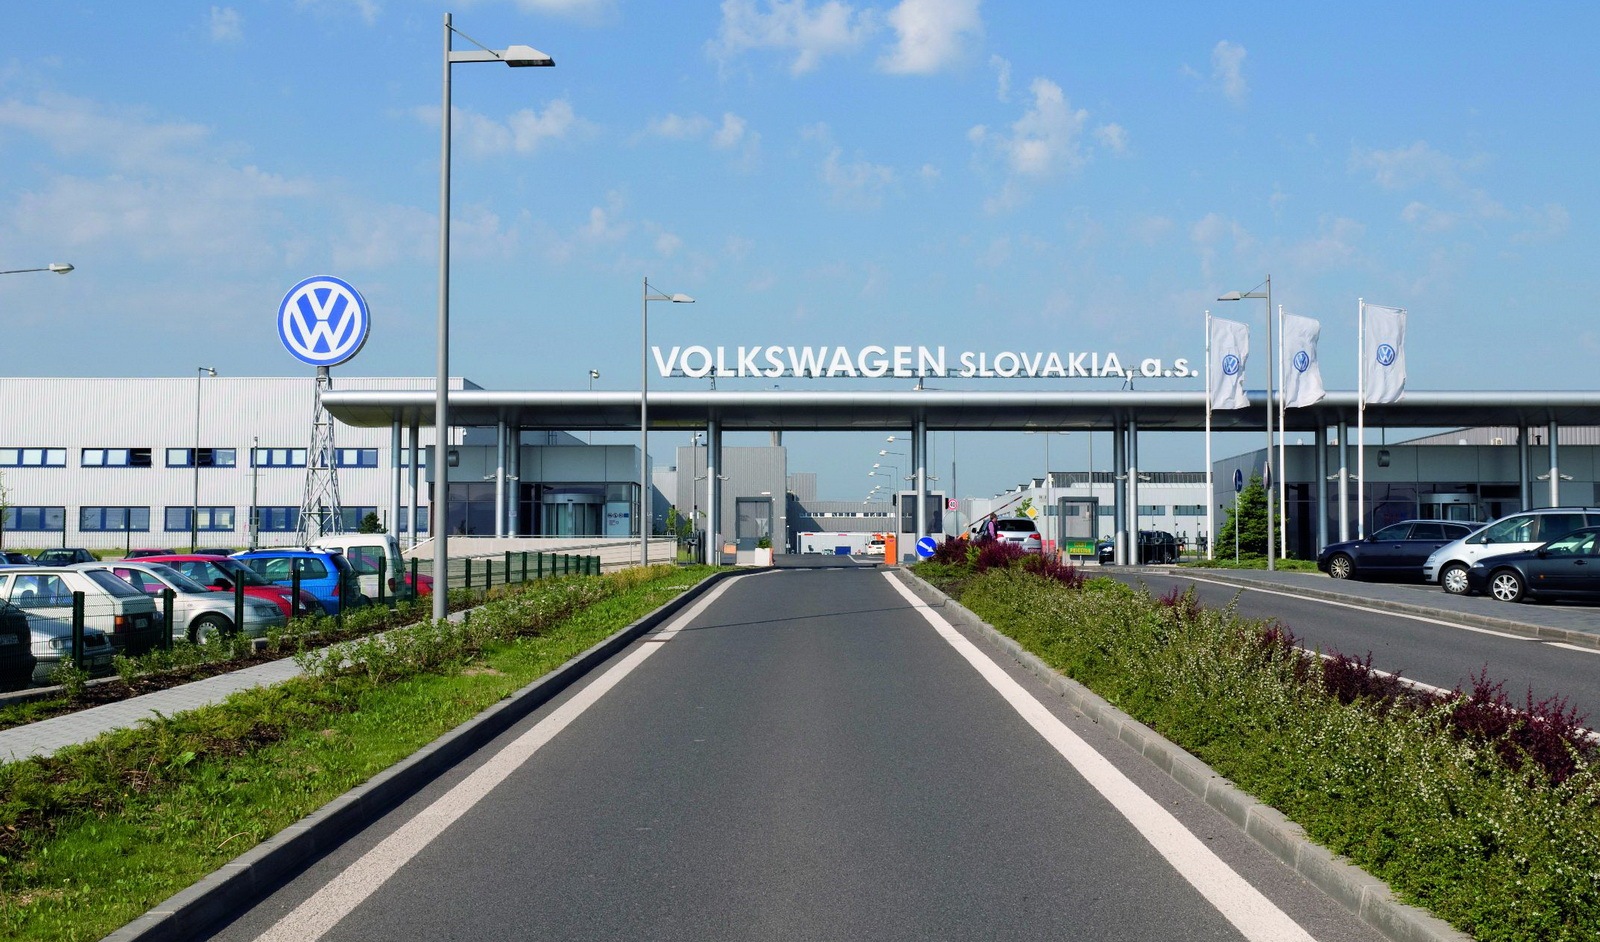 VW fabrika v Bratislave